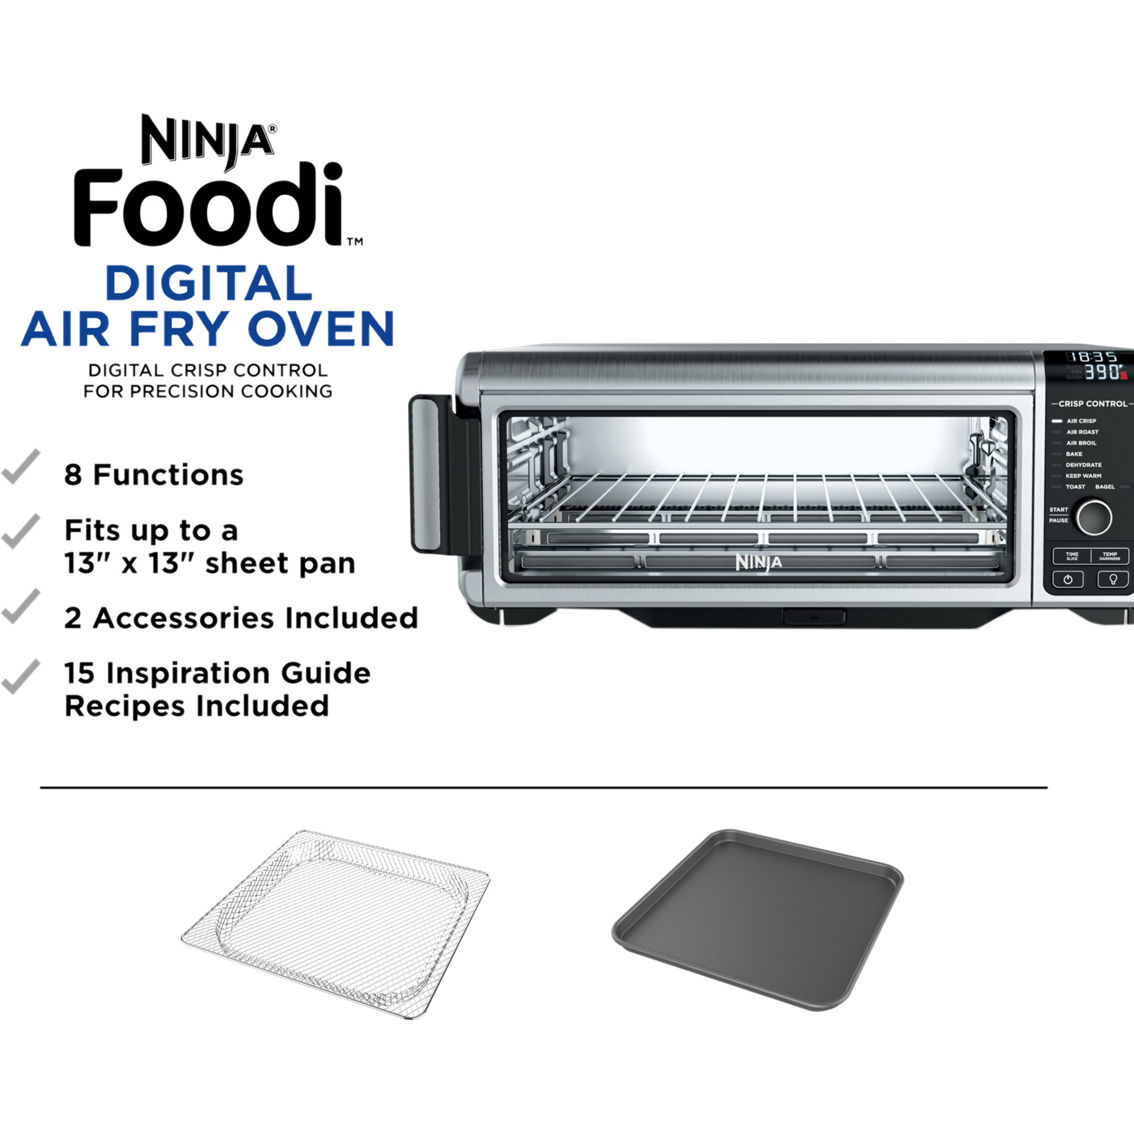 13 Ninja Foodi Accessories (Must Haves)